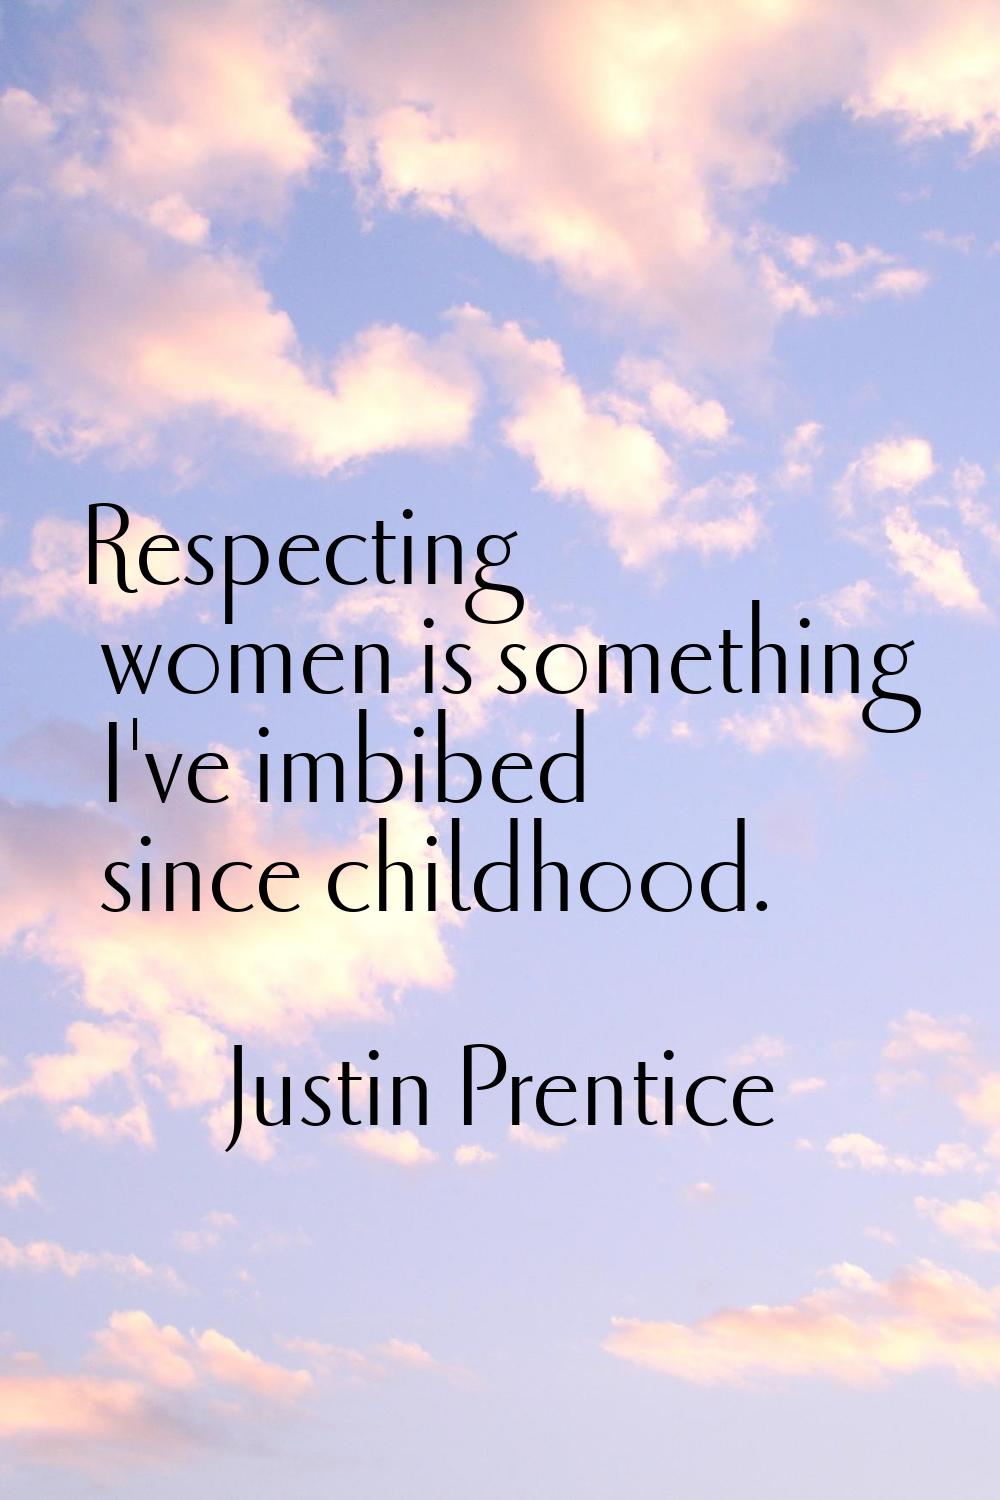 Respecting women is something I've imbibed since childhood.